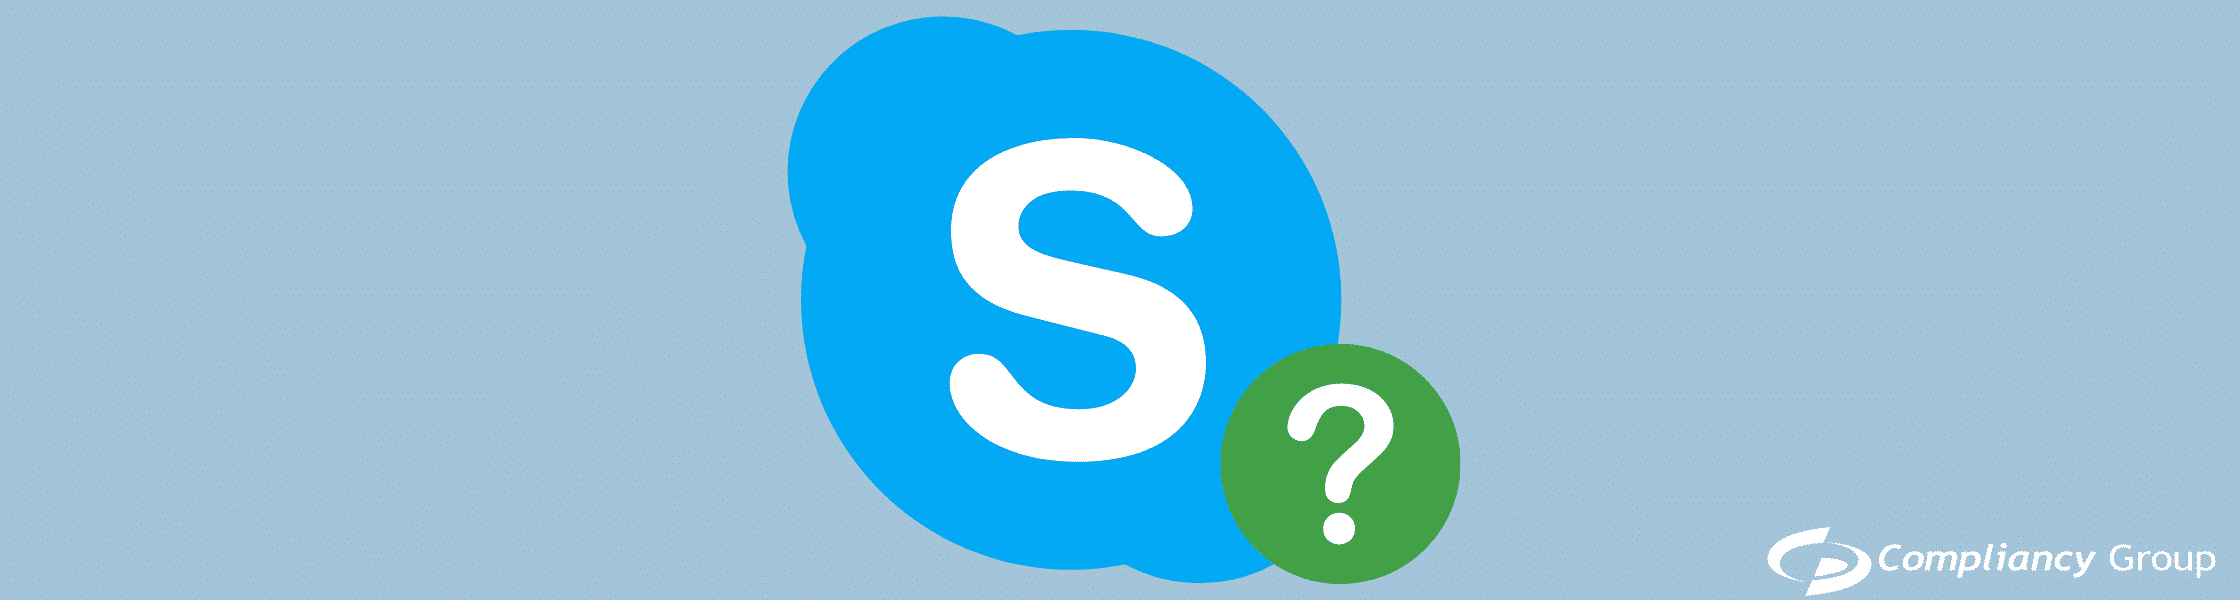 Is Skype HIPAA Compliant